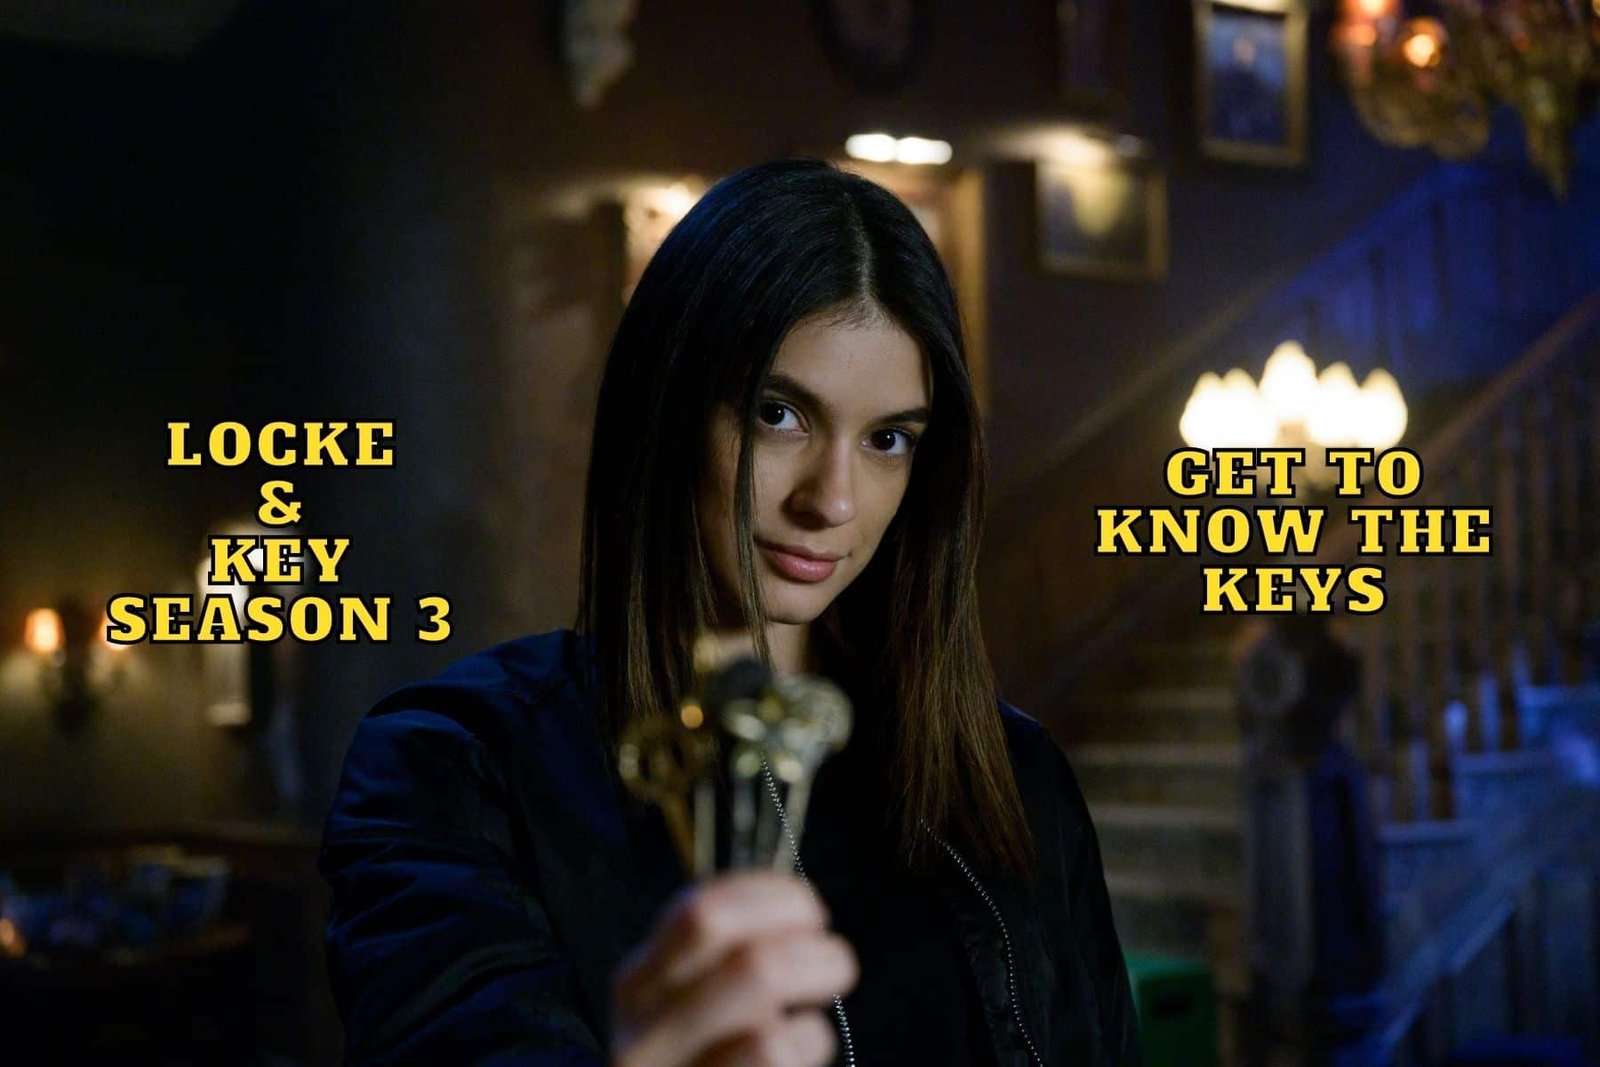 Locke and Key Season 3: Get to Know the Keys!